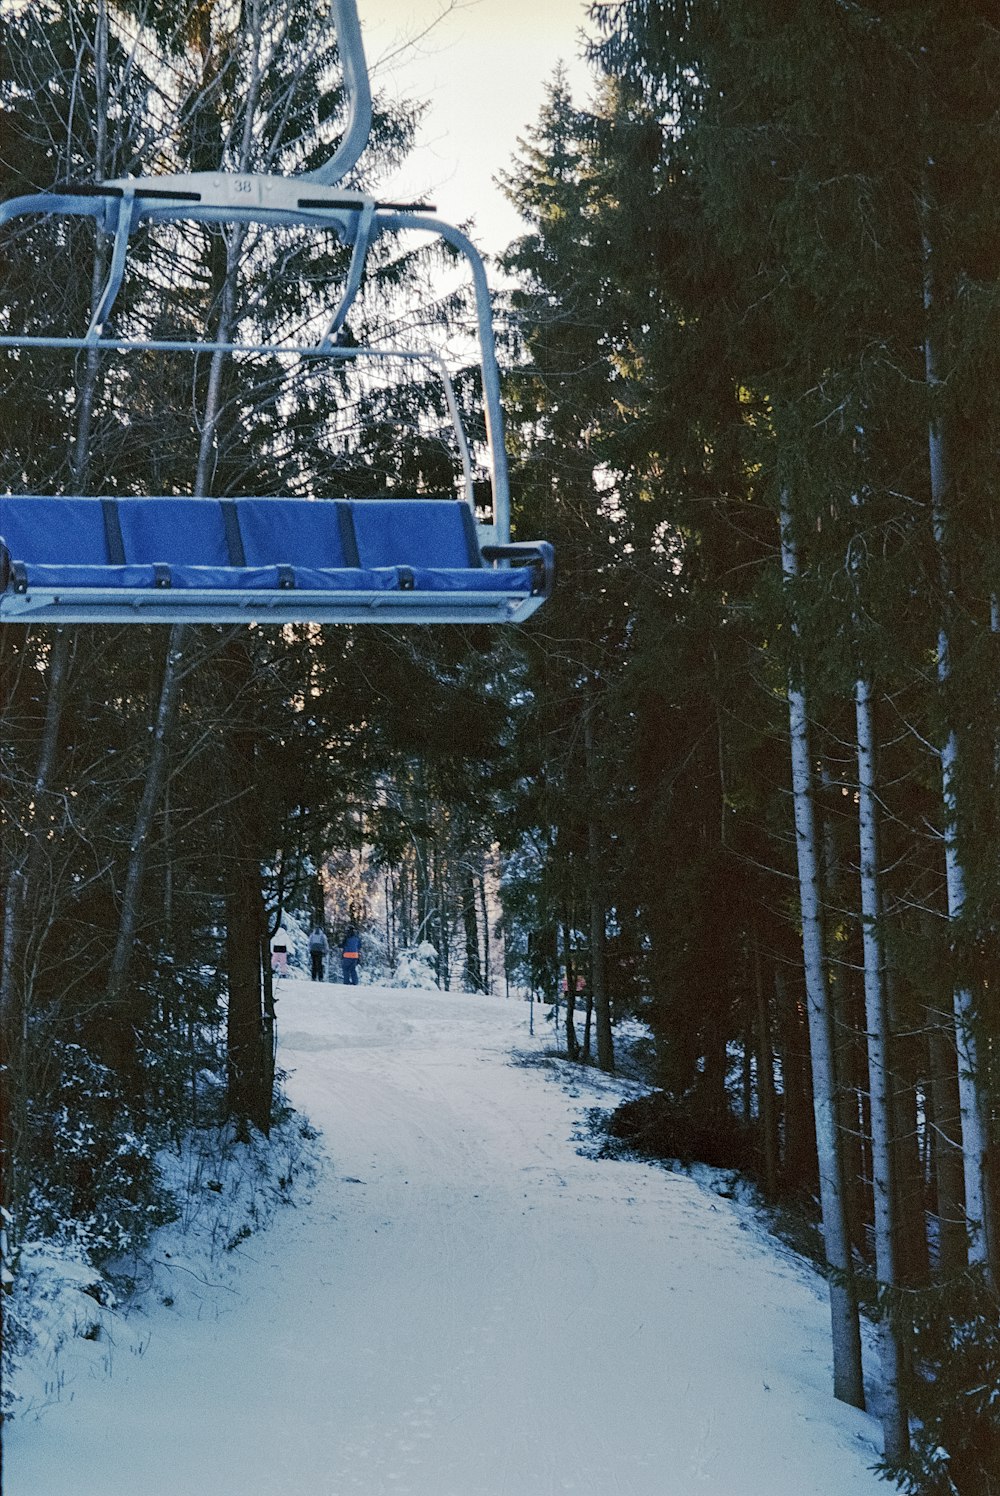 a blue ski lift going up a snowy hill